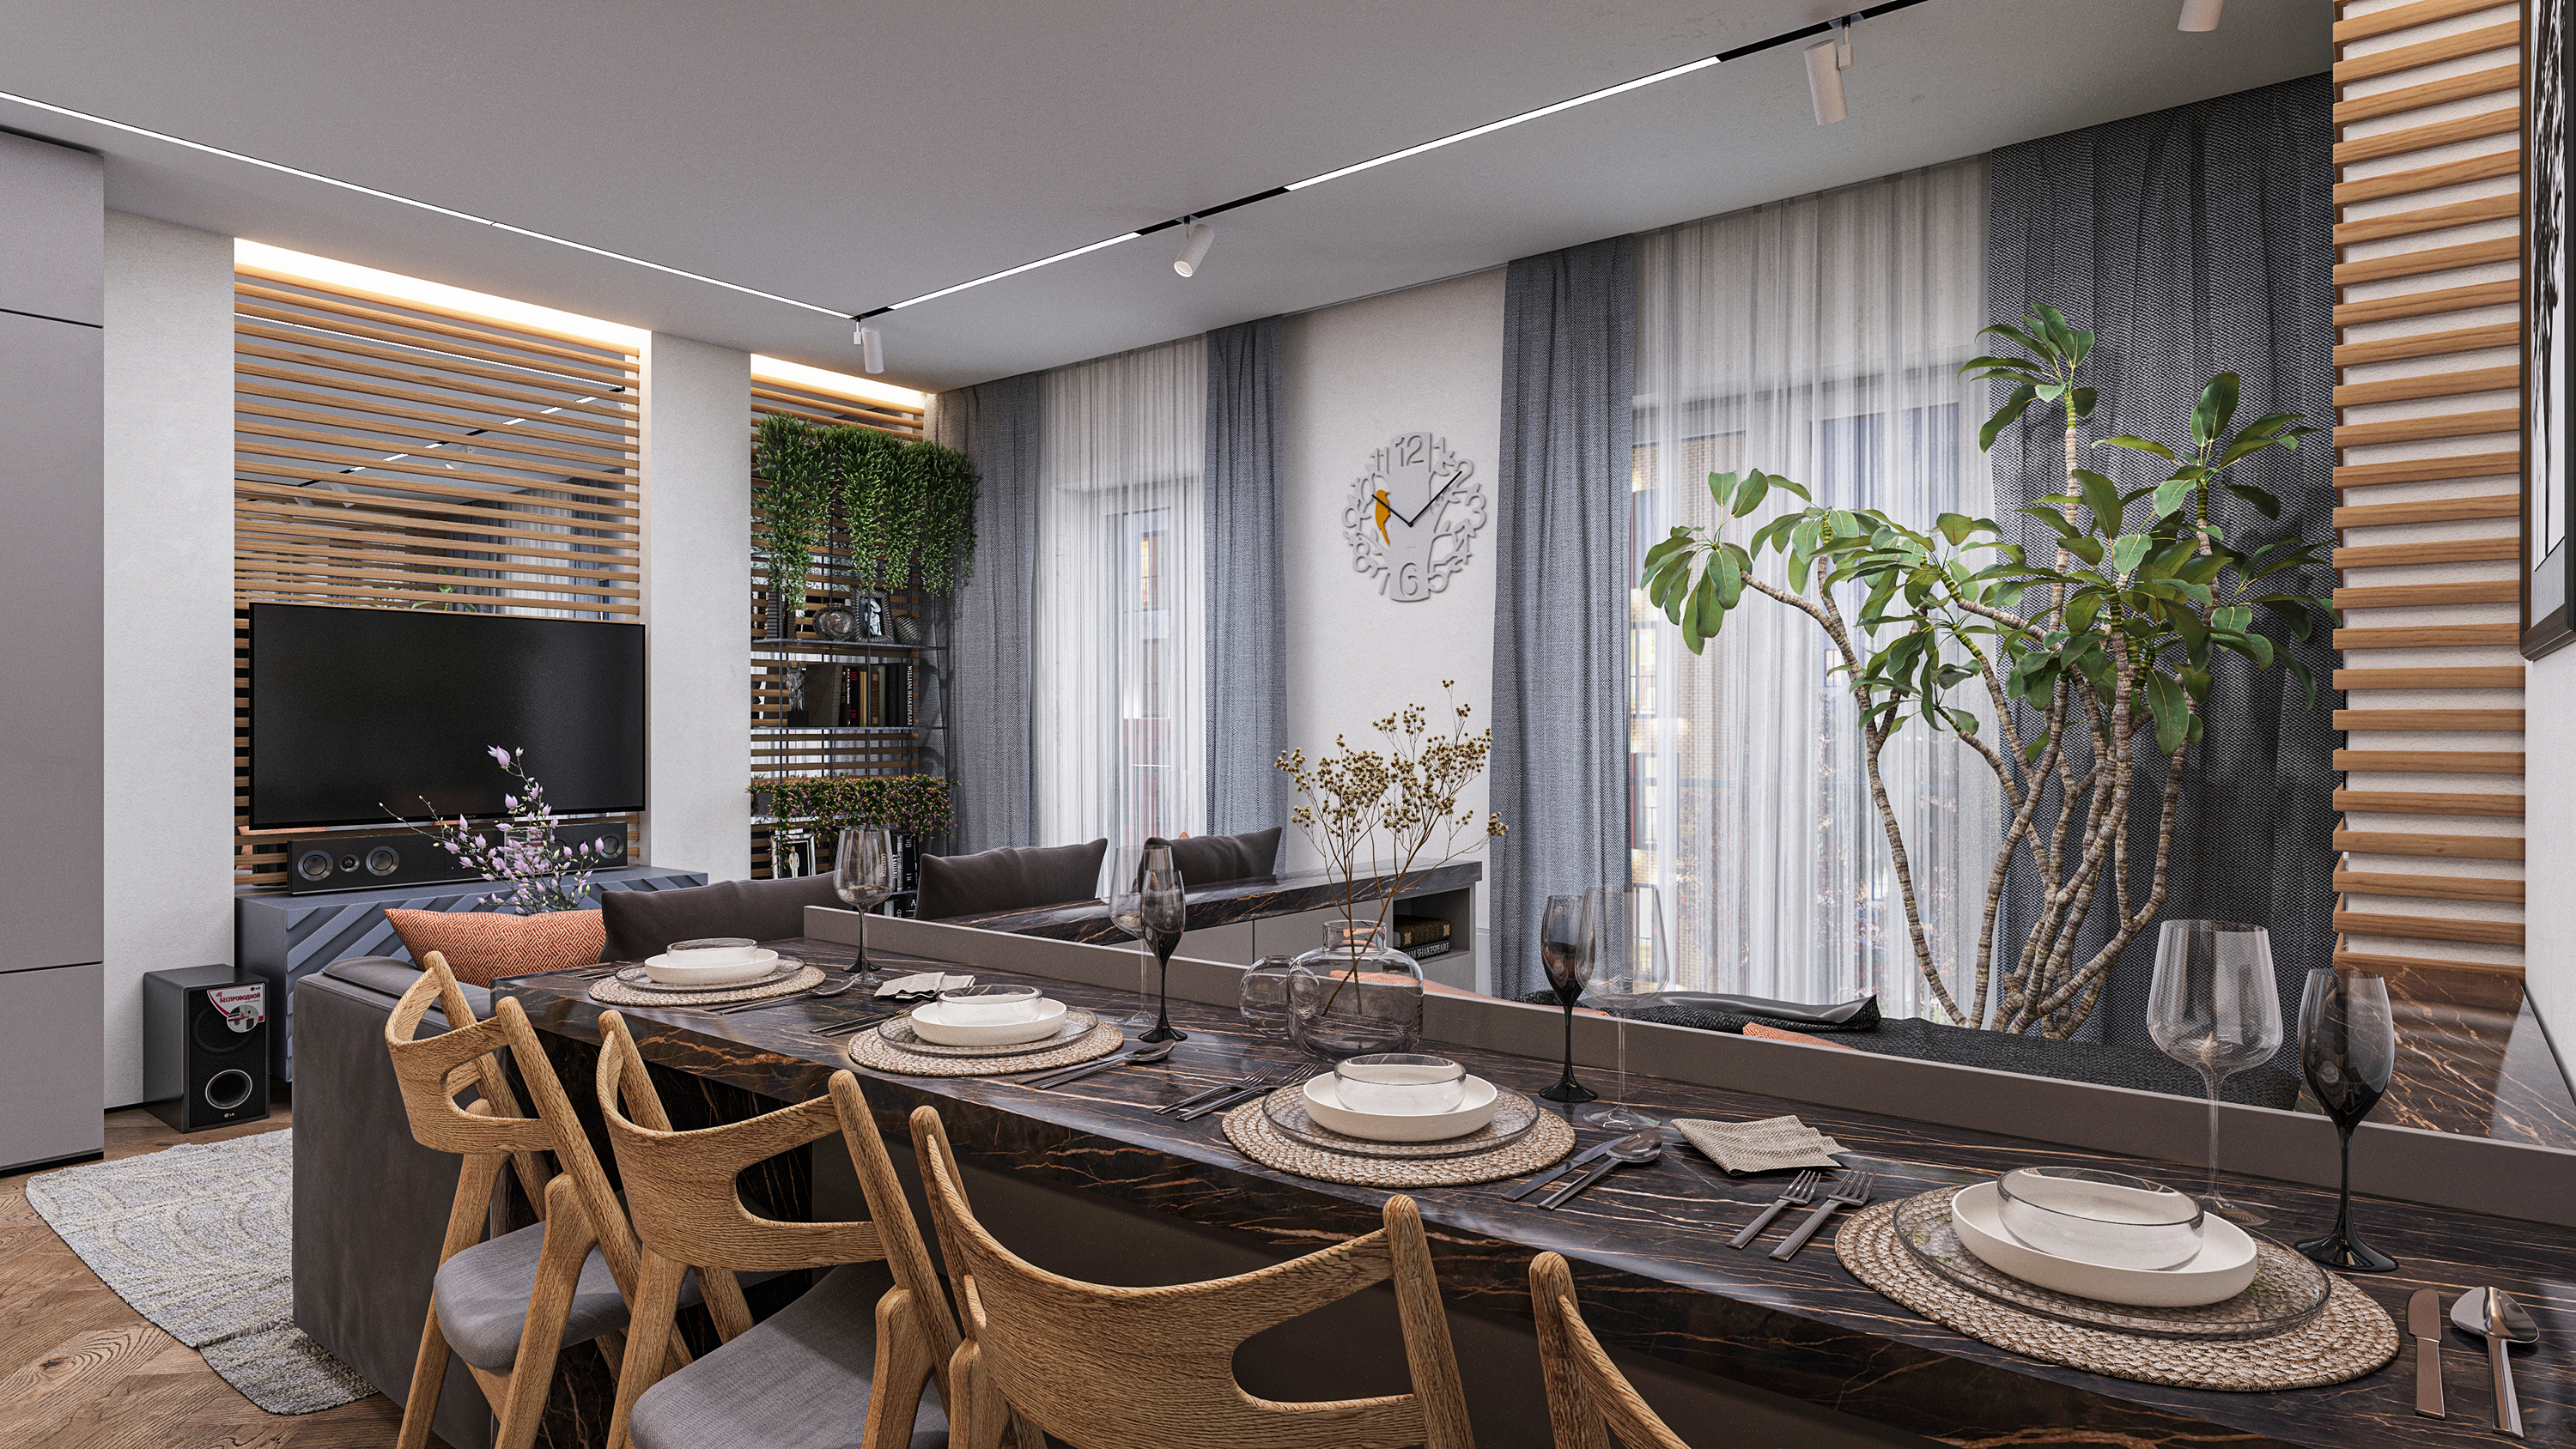 Residential complex "Skandi". INTERIORS. in 3d max Corona render 8 image